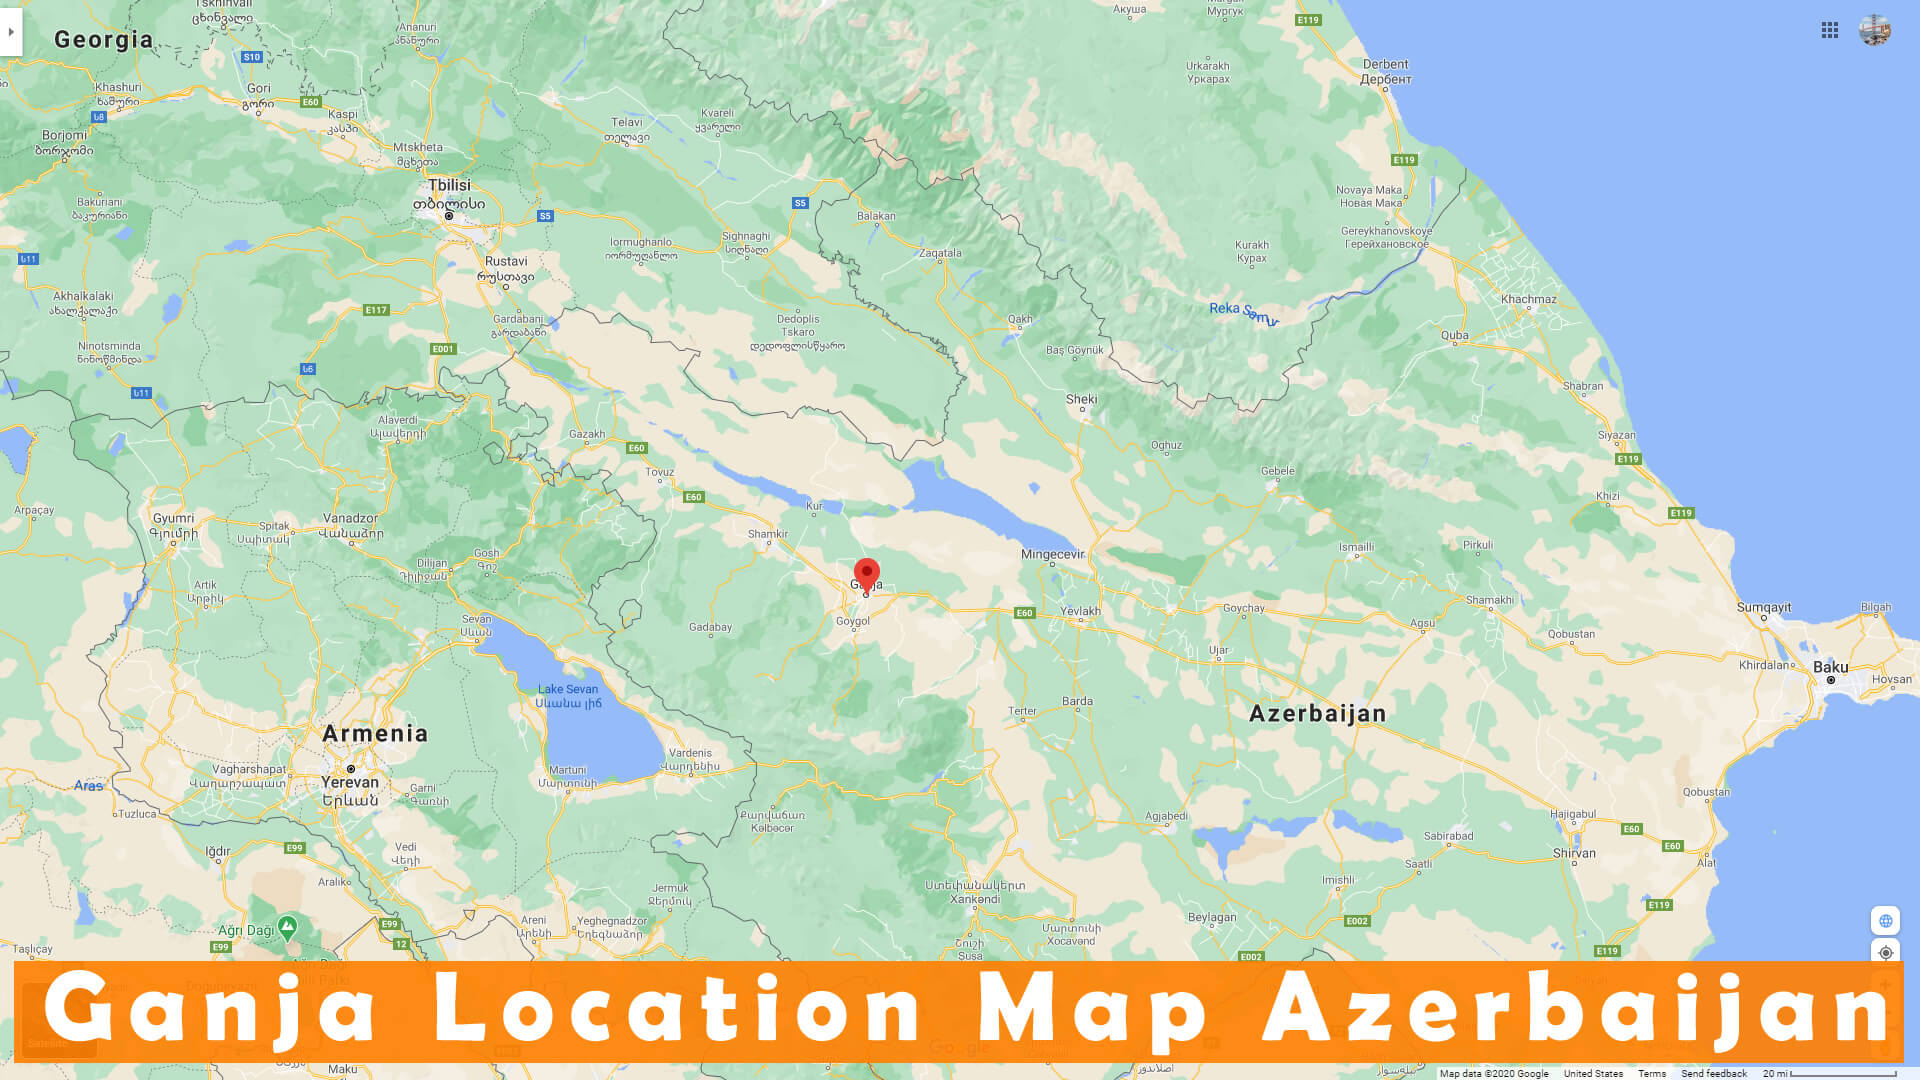 Ganja Location Map Azerbaijan